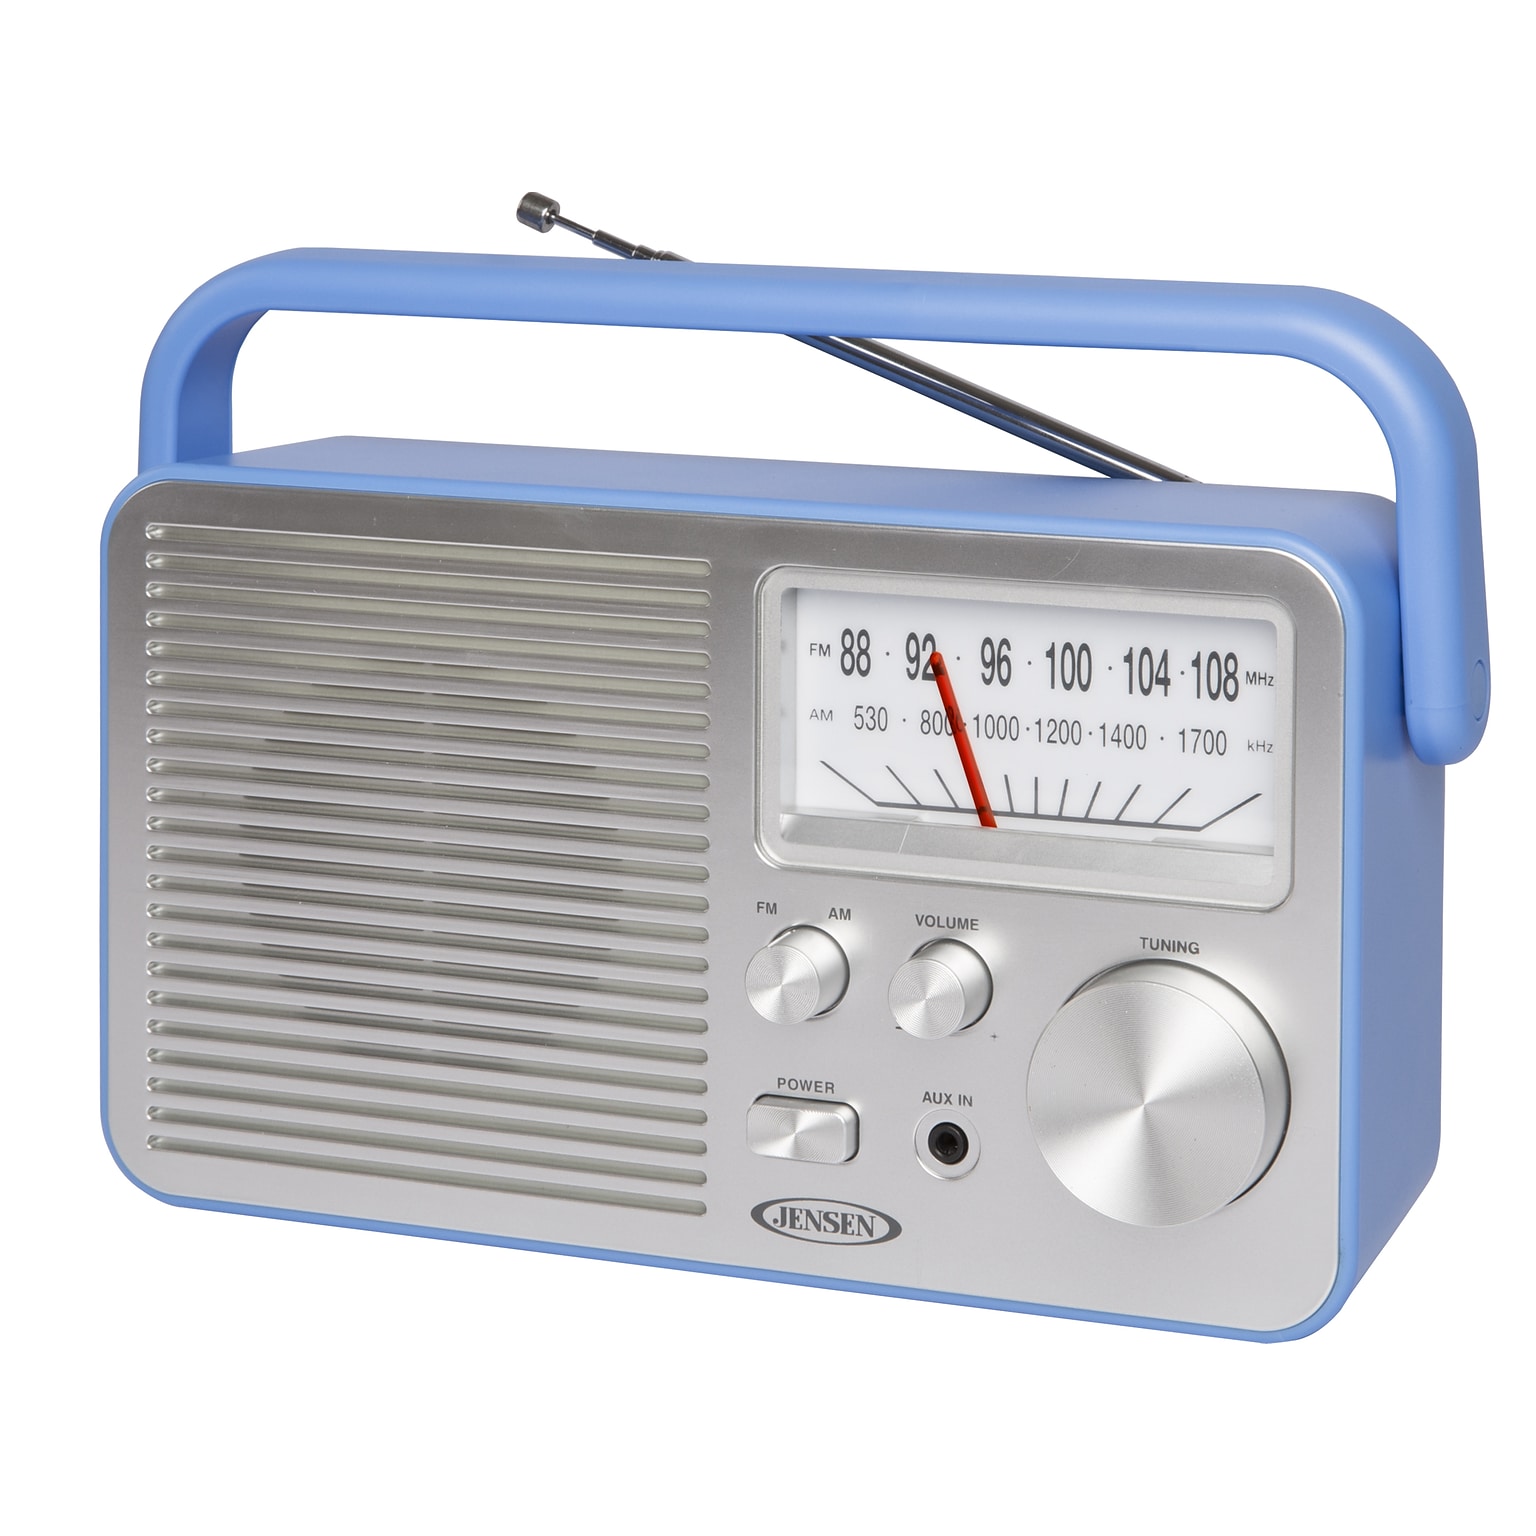 Jensen MR-750 Portable AM/FM Radio, Blue (MR-750-BL)